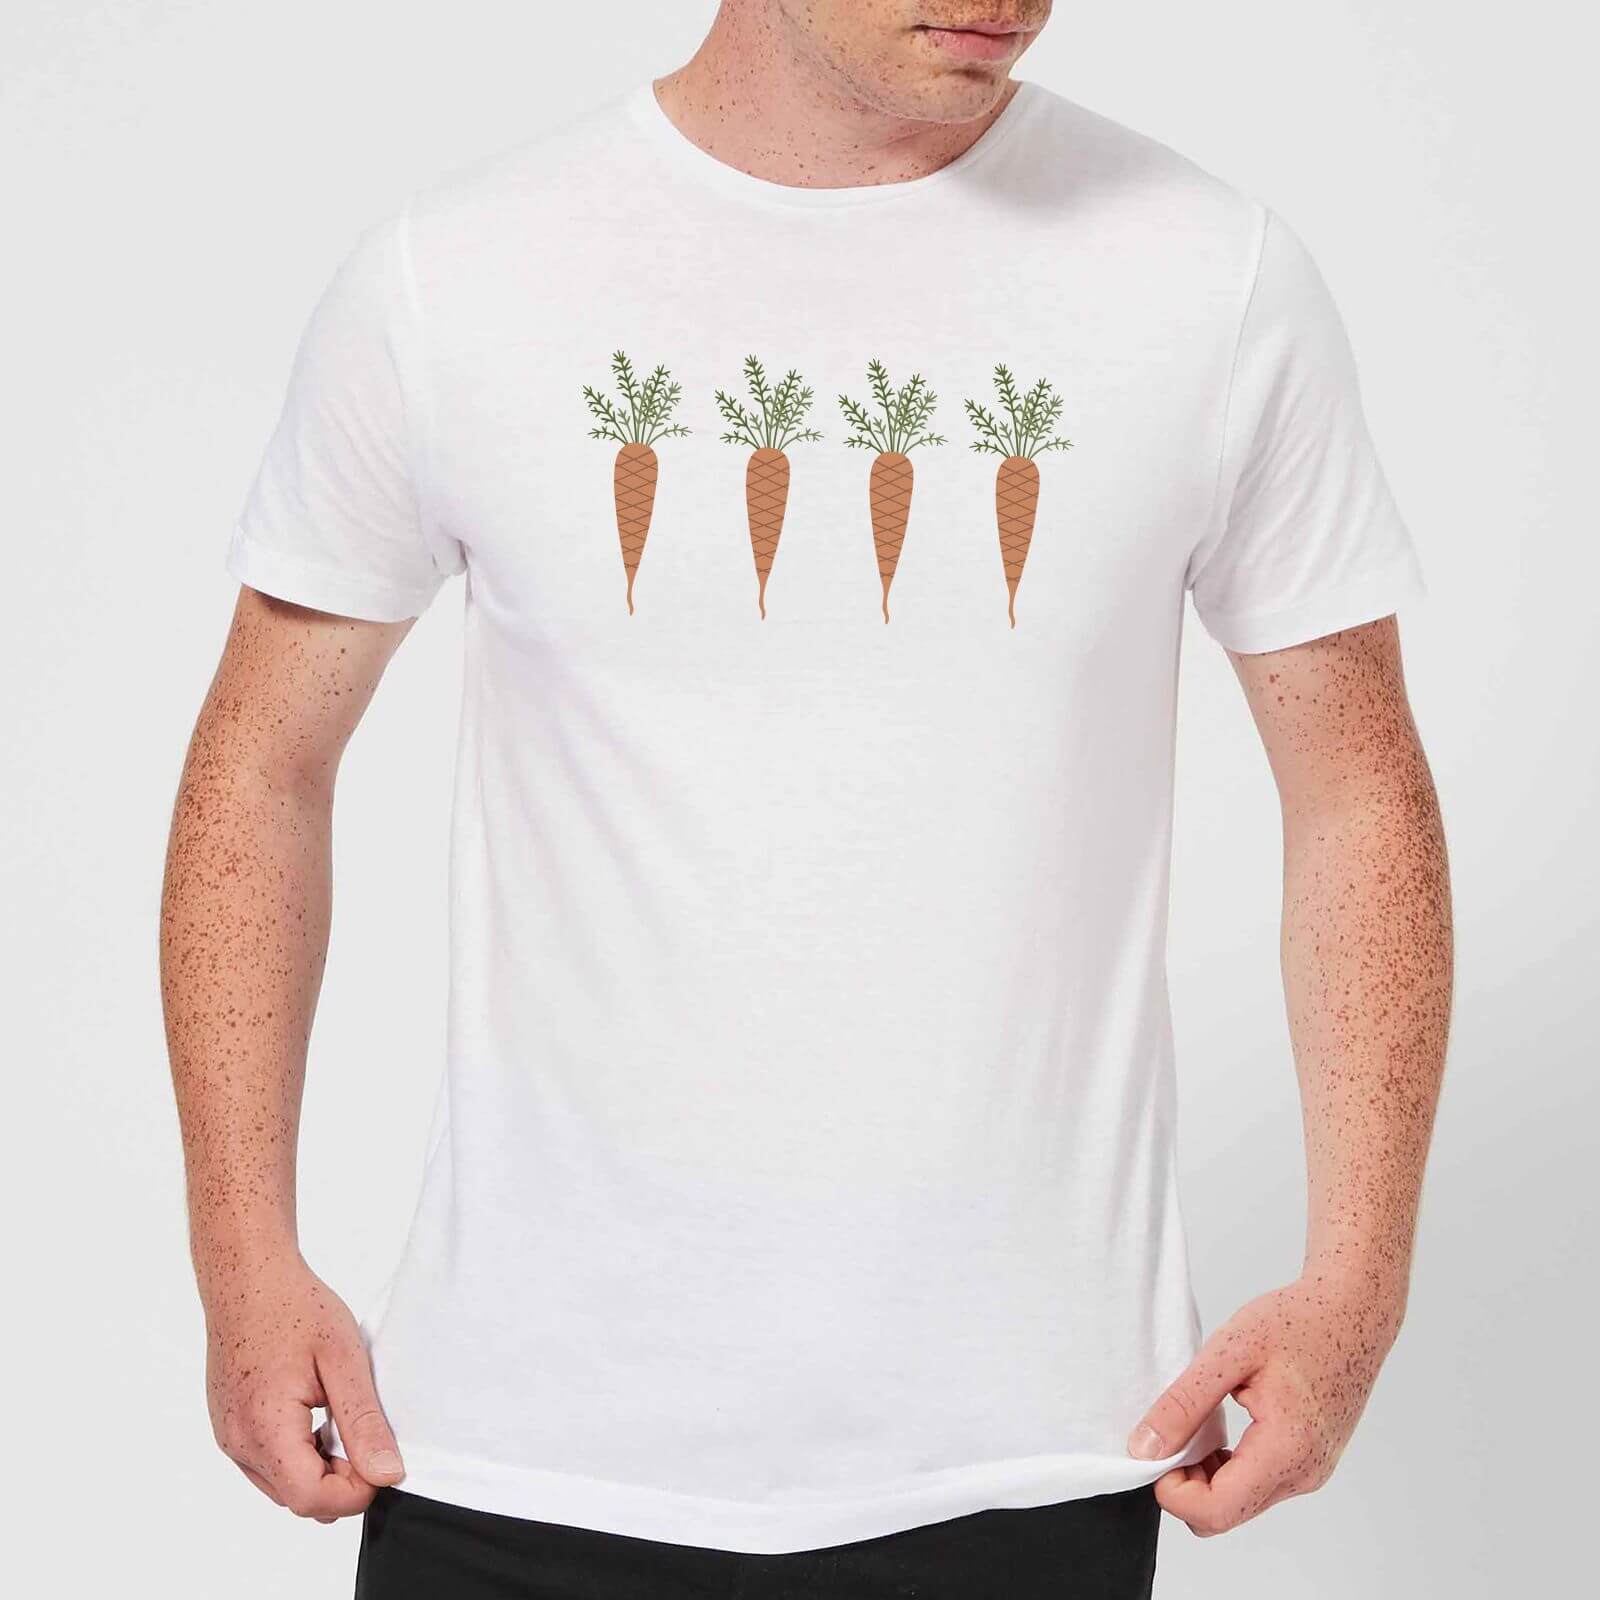 Carrots Men's T-Shirt - White - S - White